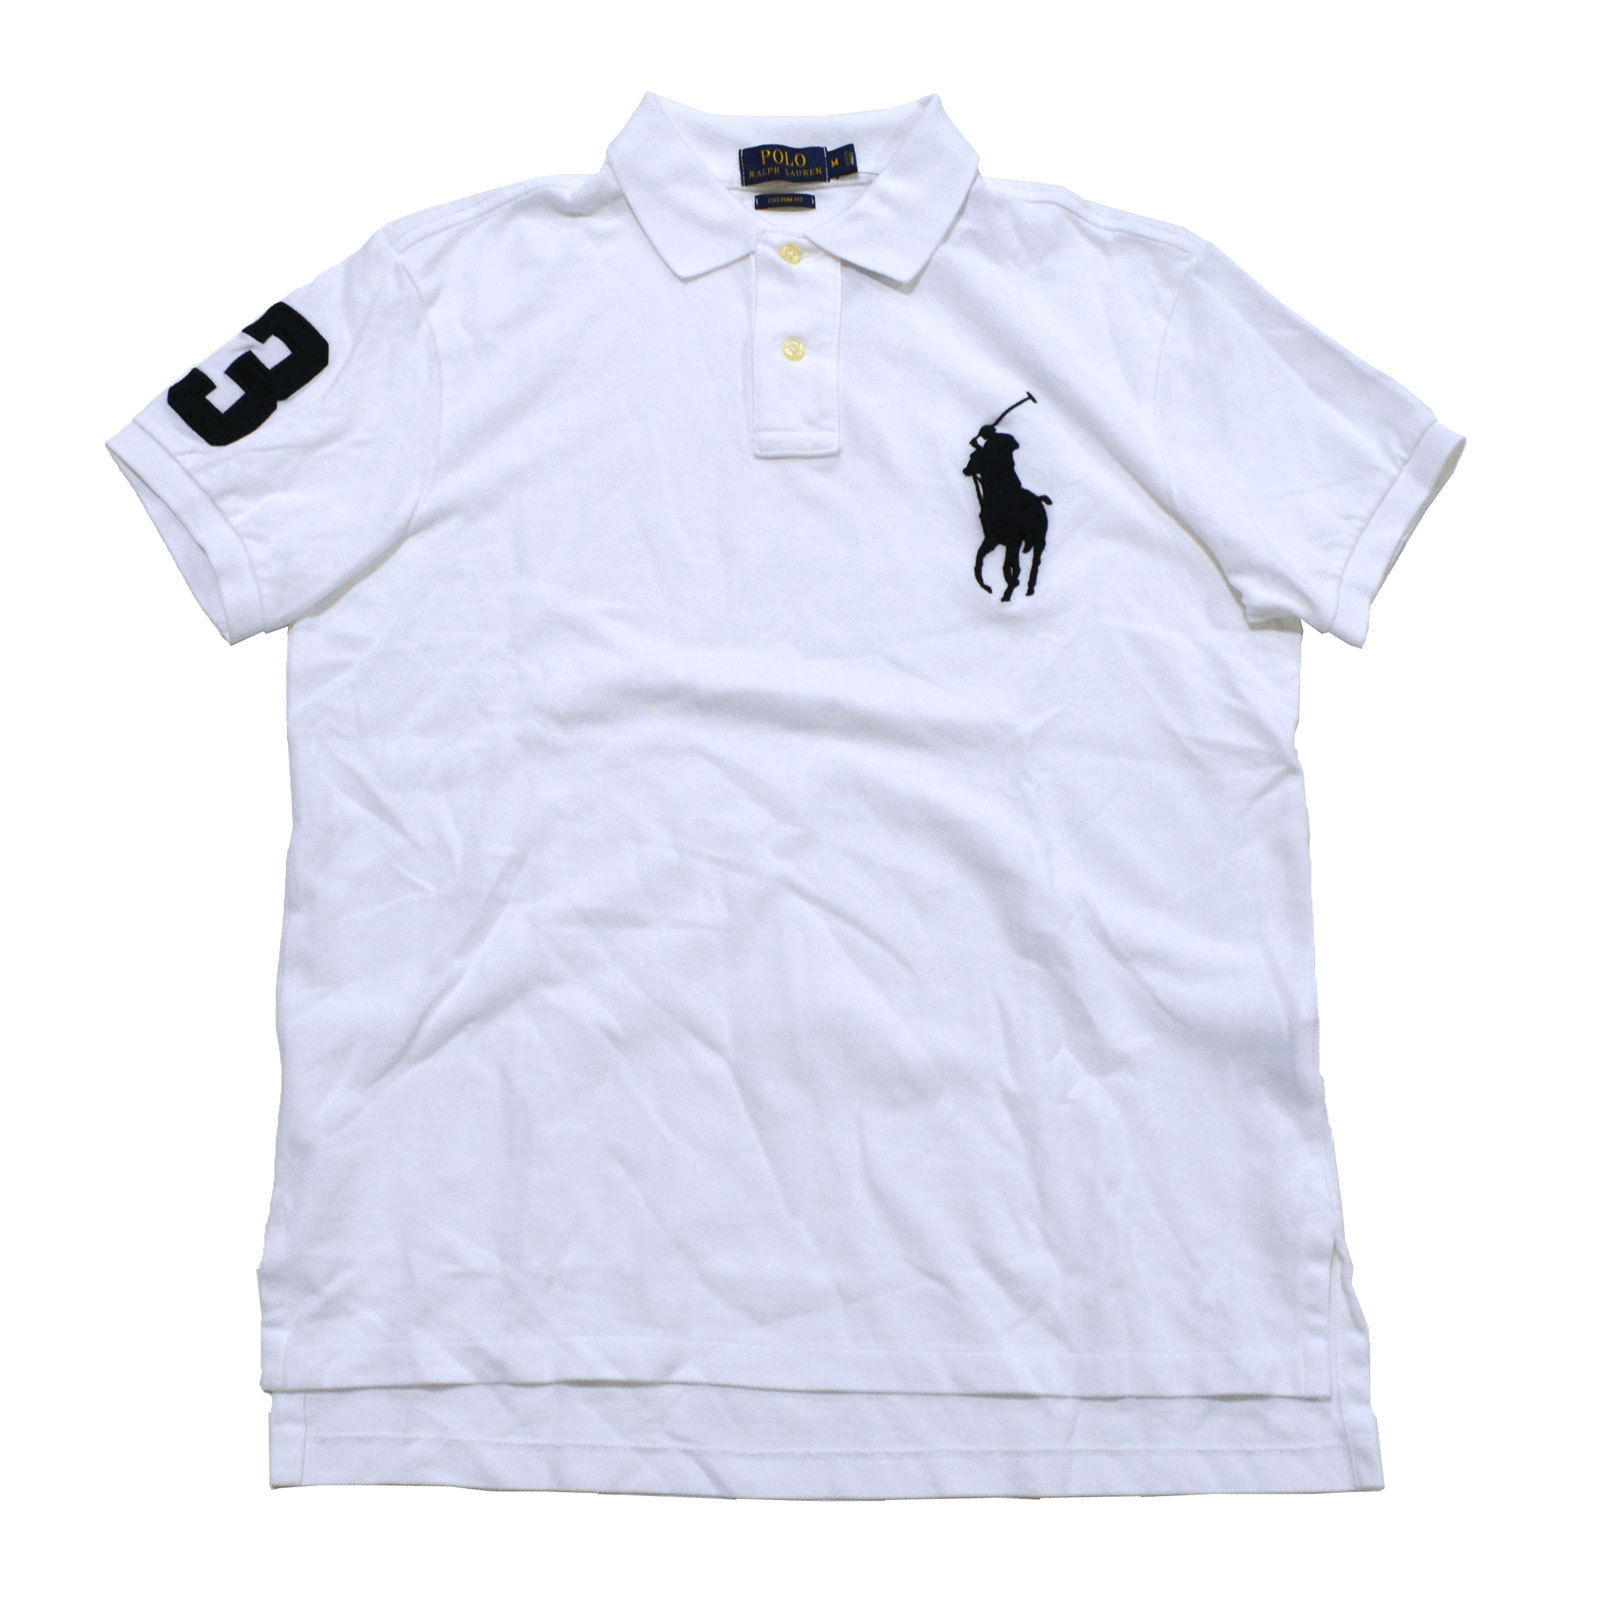 polo ralph lauren men's big pony custom fit mesh polo shirt (xl, classic white) - image 1 of 3